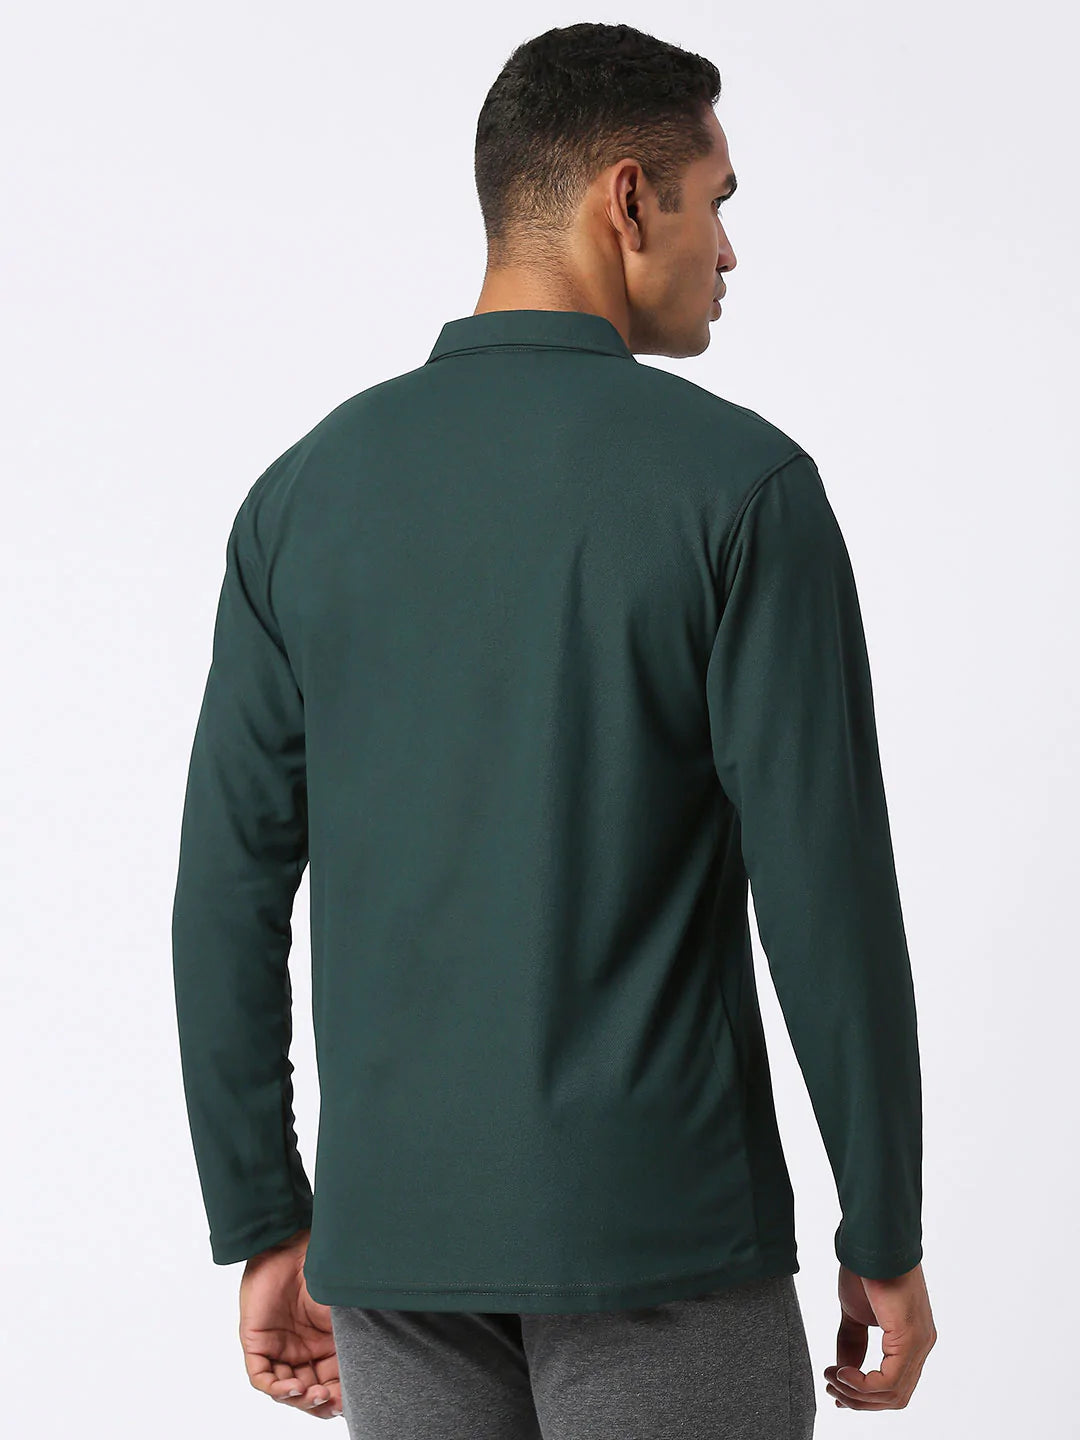 Men's Sports Polo Shirt - Dark Green, Long Sleeves - Front